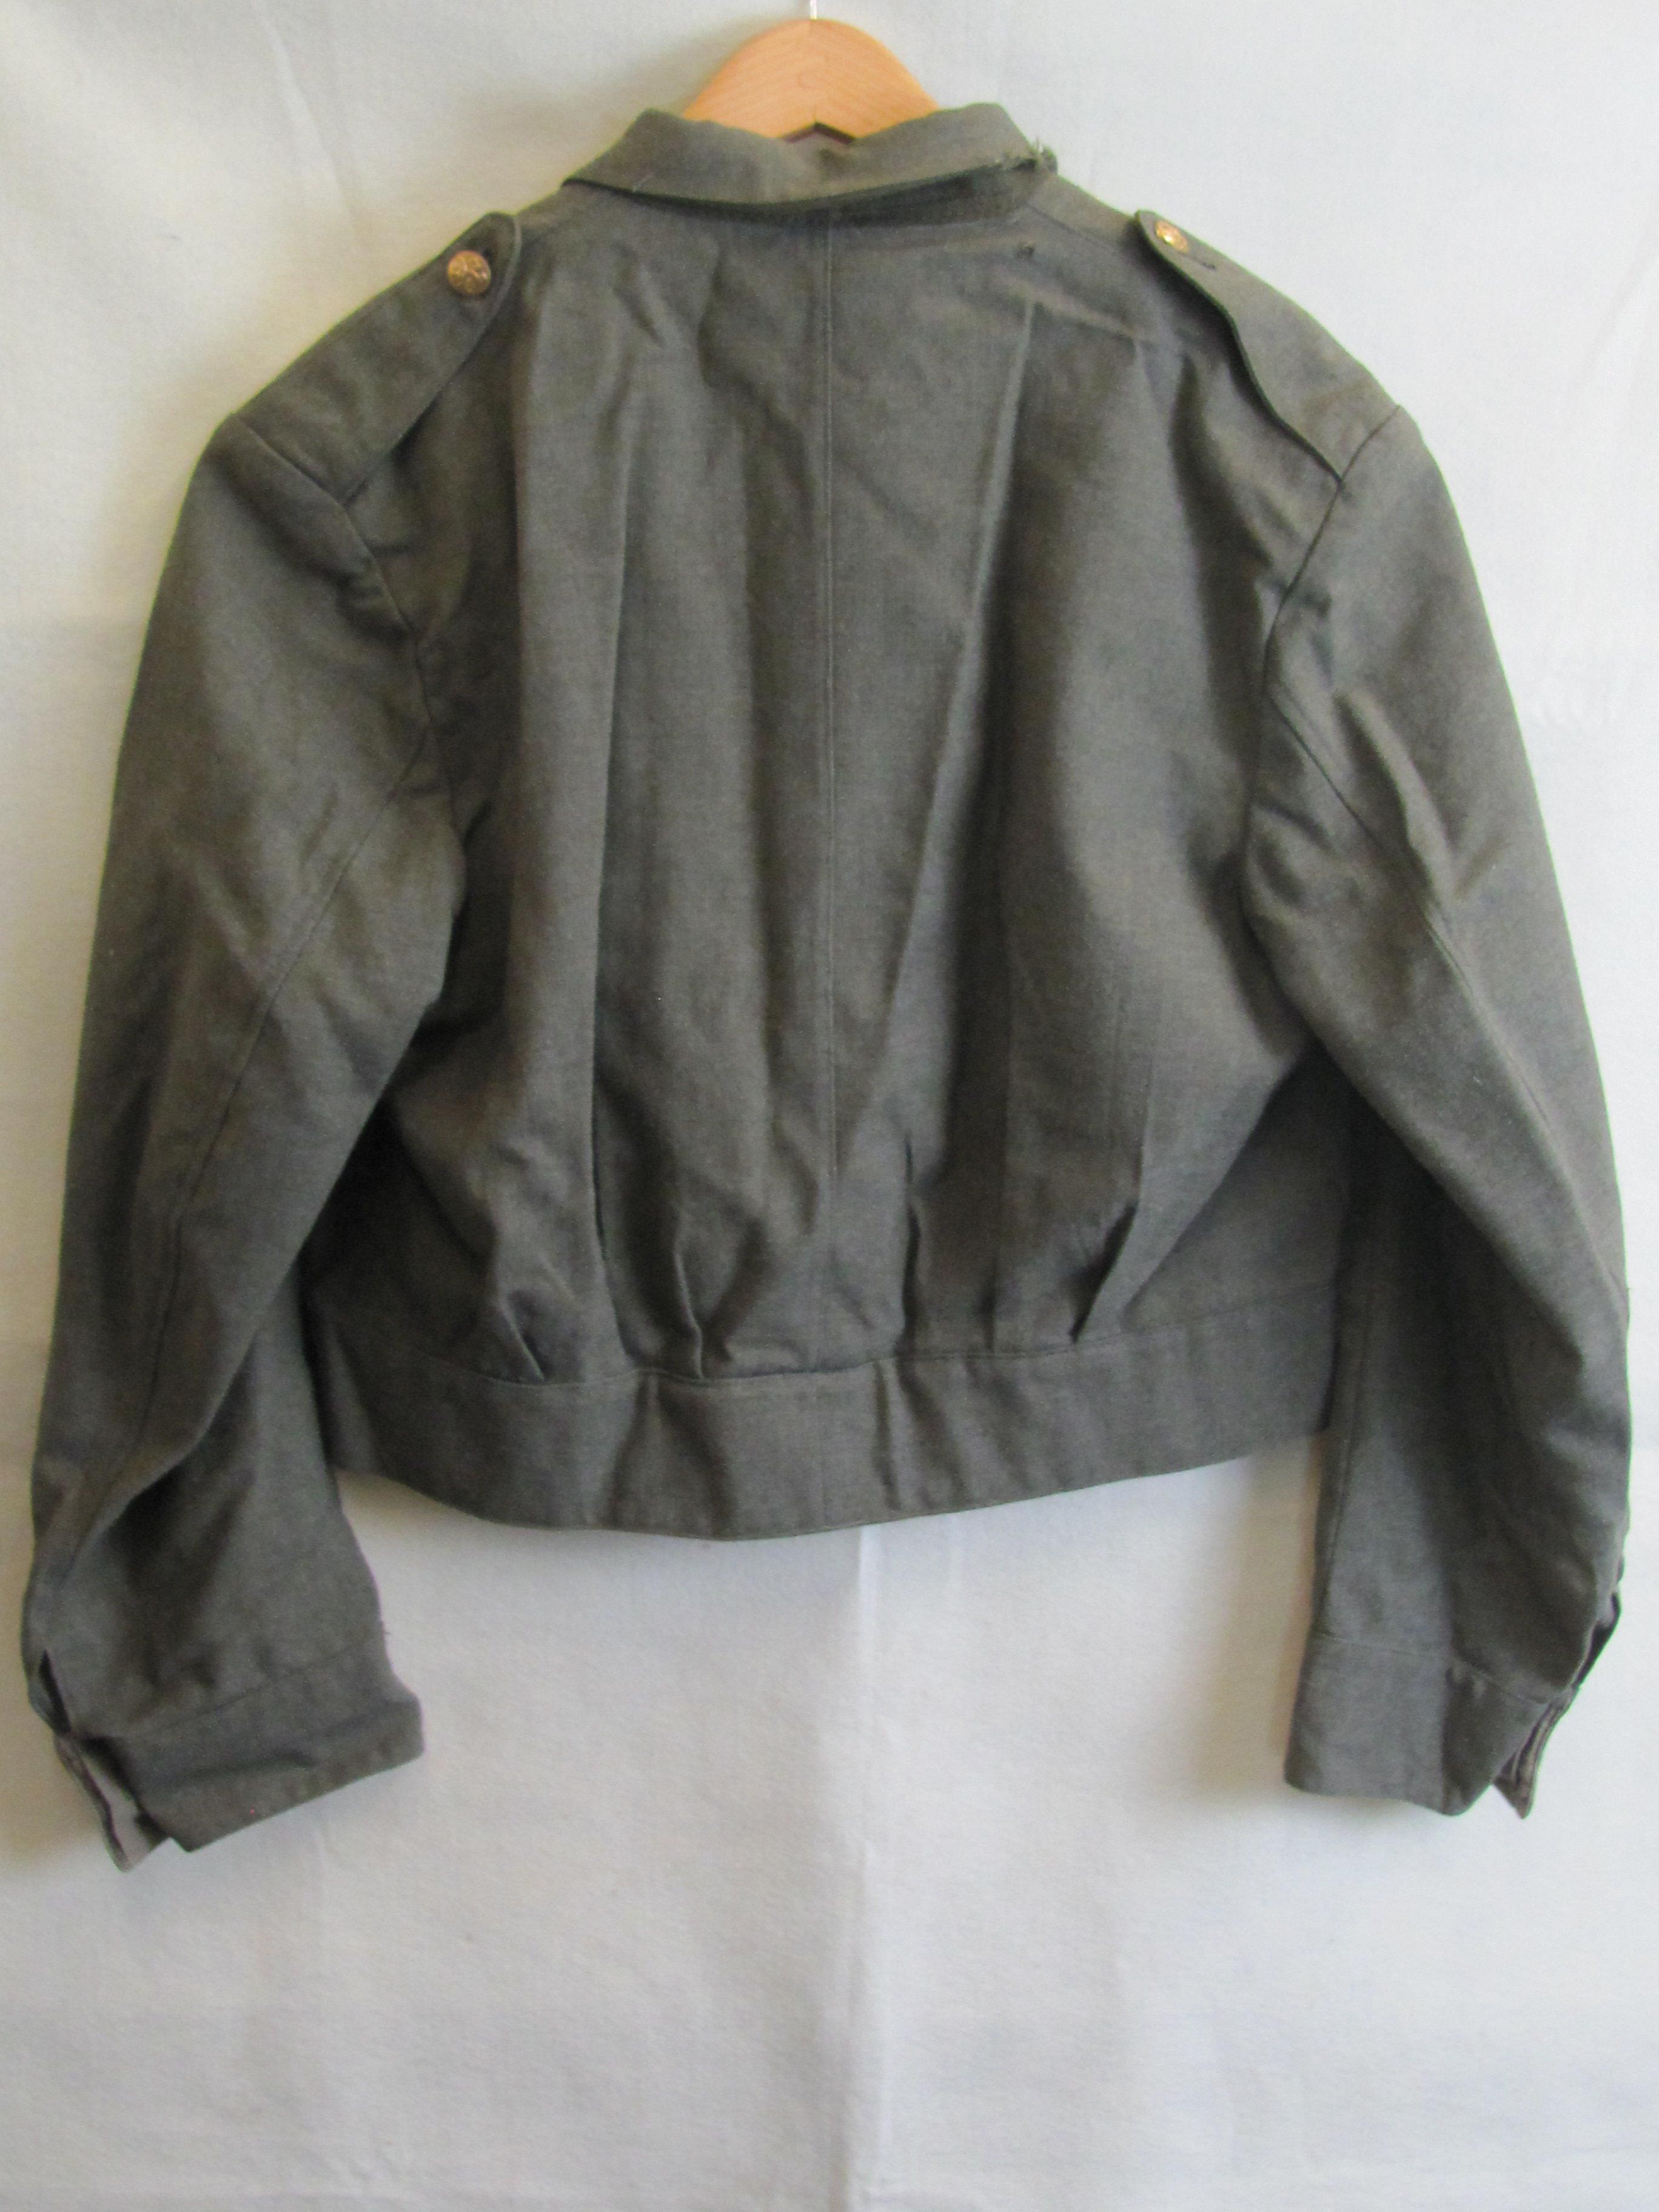 Men's Jacket – Size Medium? - Marked “Mfg. Holland Wool” - Drab-Olive Green/Gray -